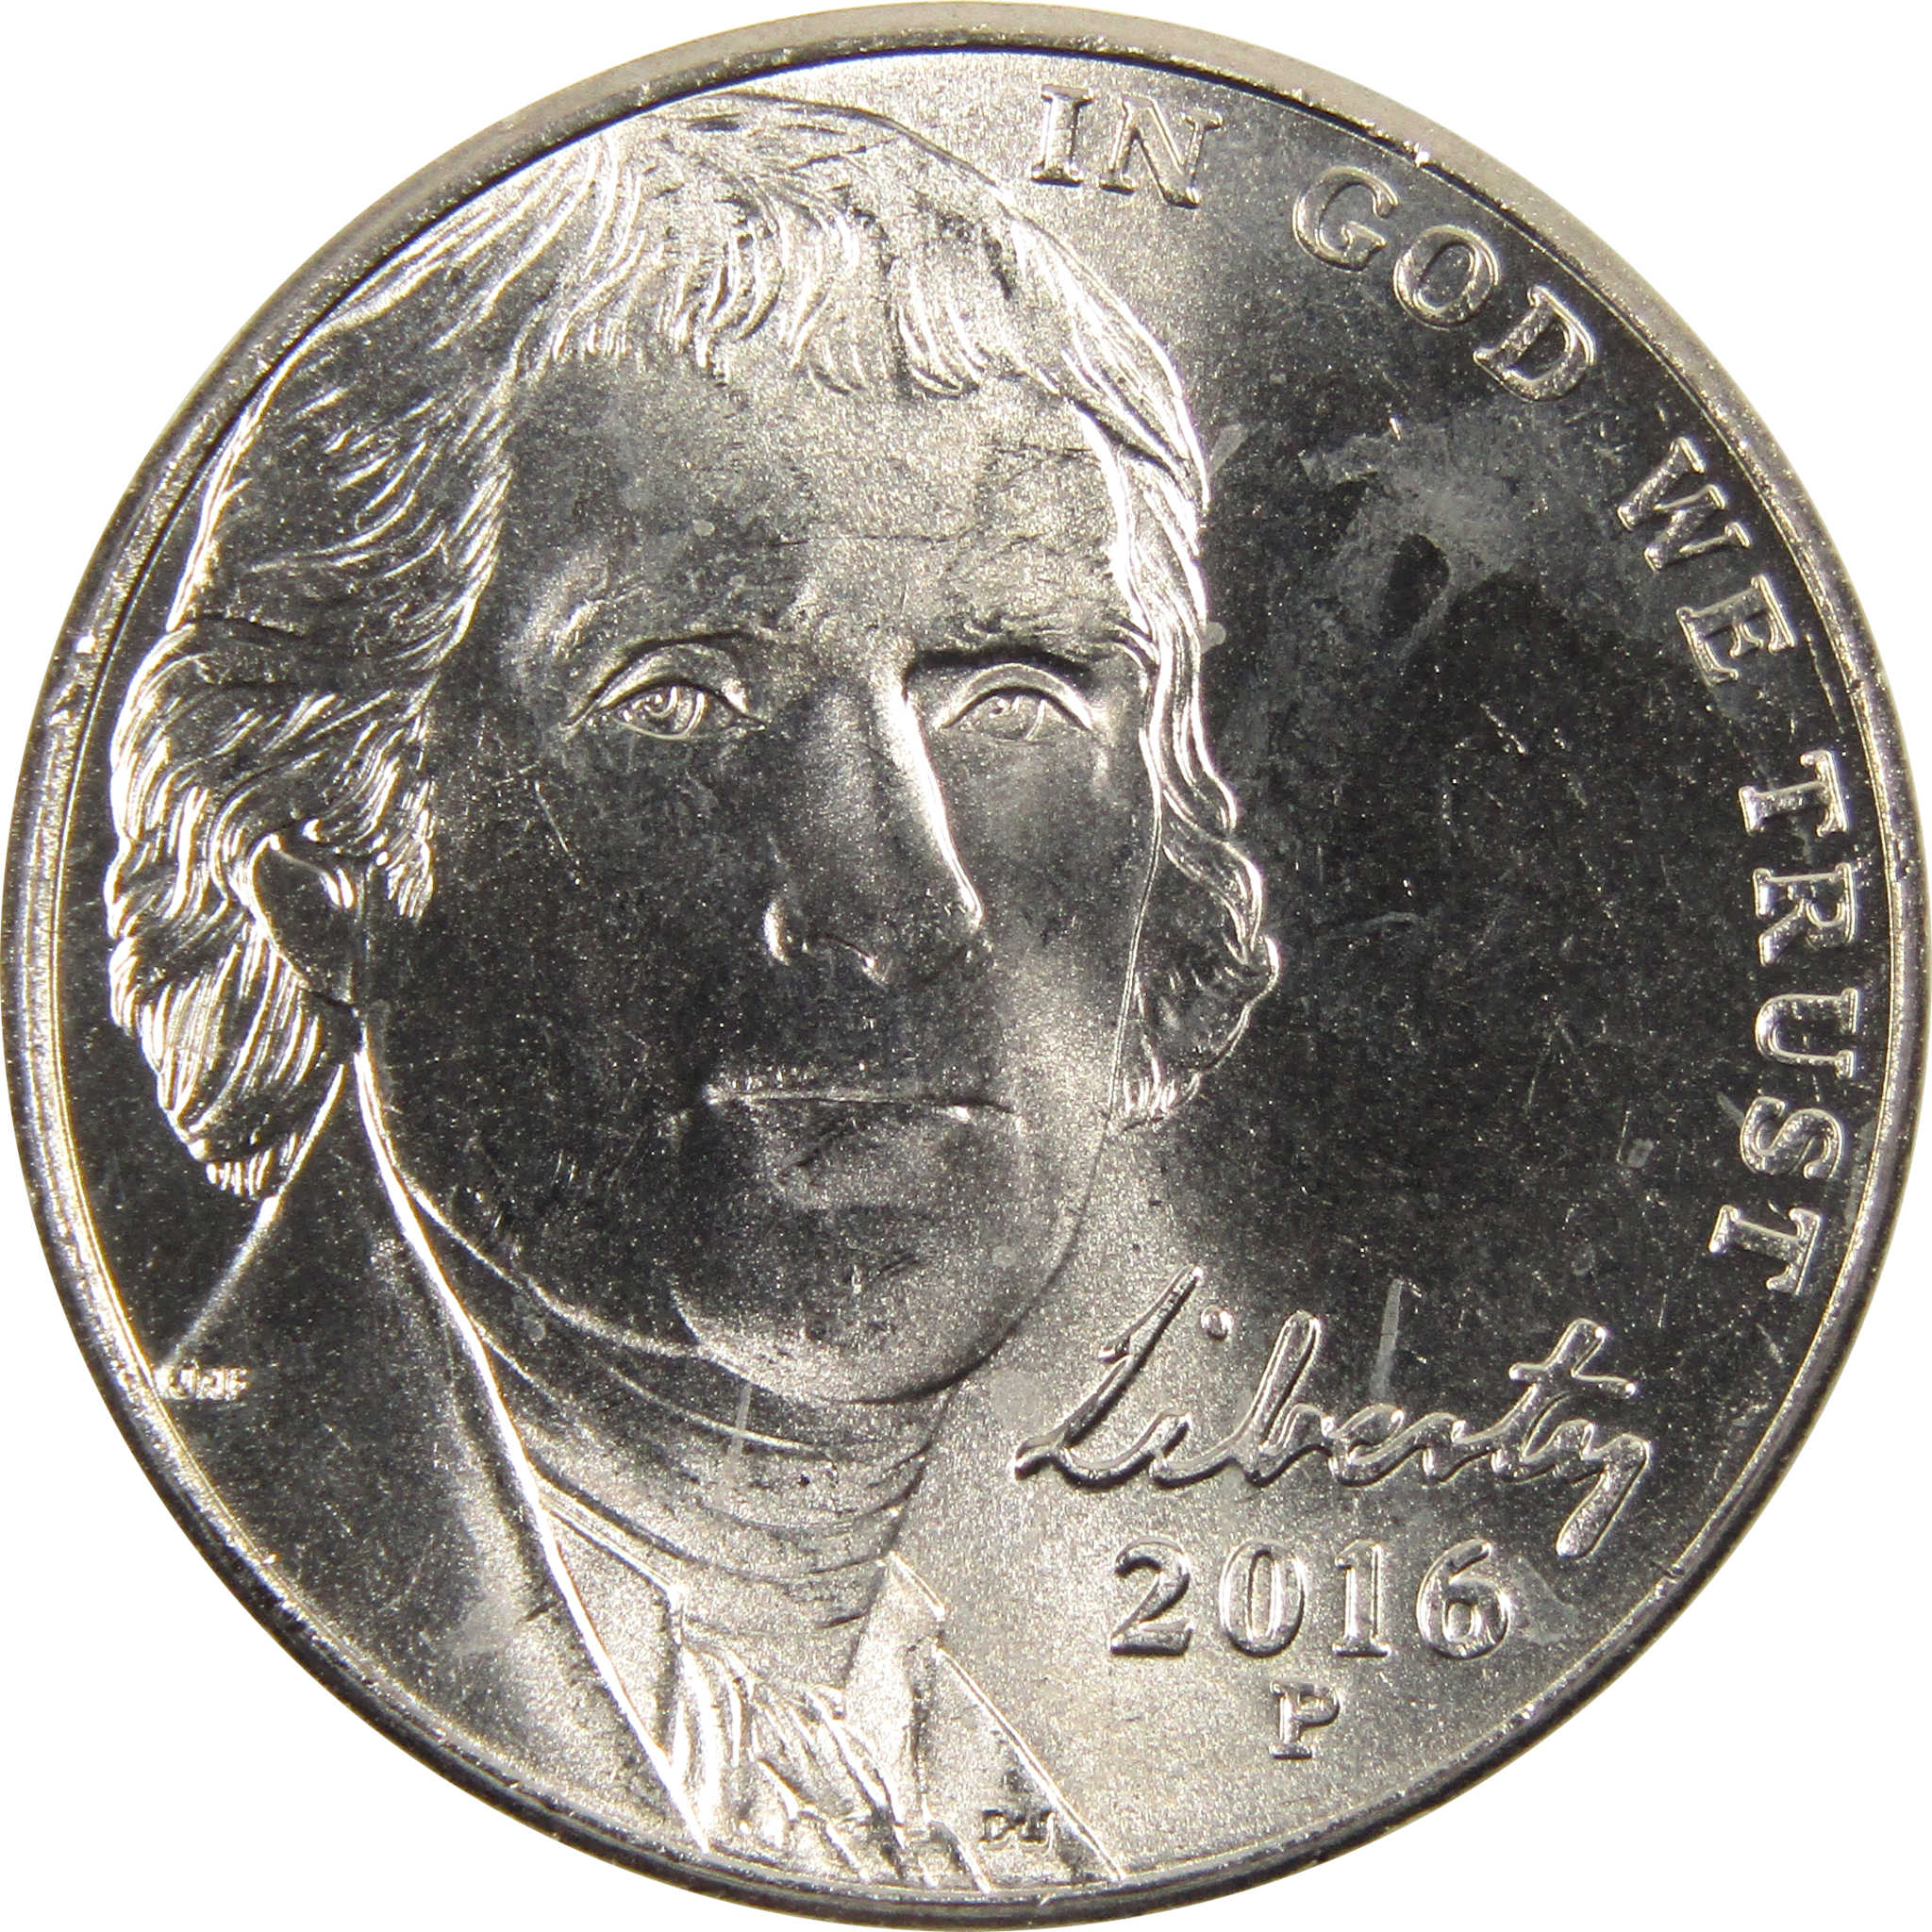 2016 P Jefferson Nickel BU Uncirculated 5c Coin